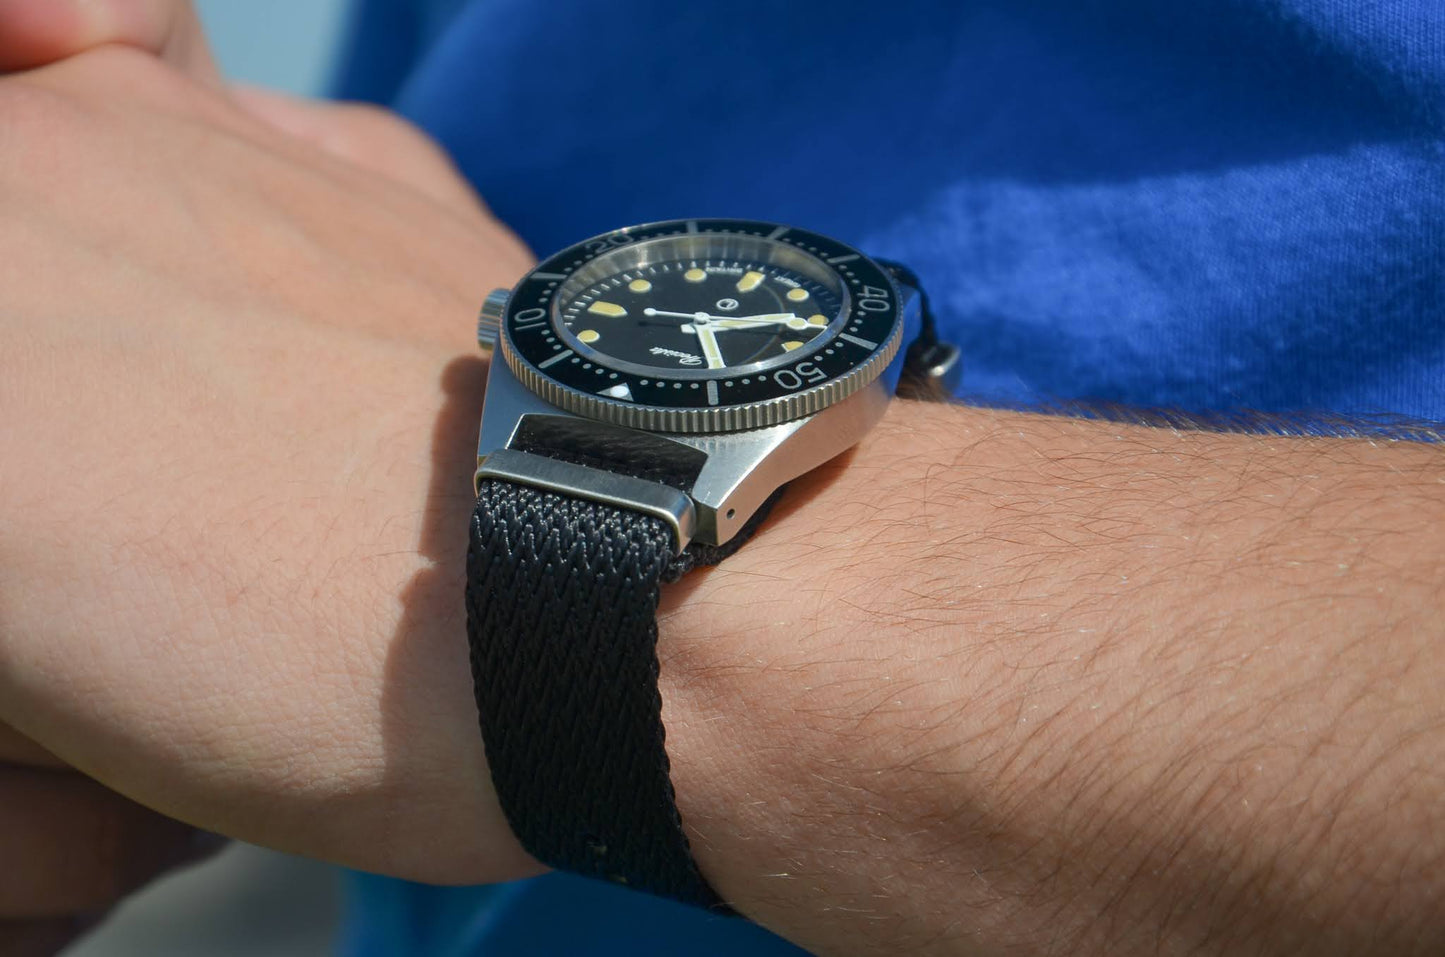 The ' Ewan of Cluny' - Black Herringbone patterned military watch strap made of a soft nylon